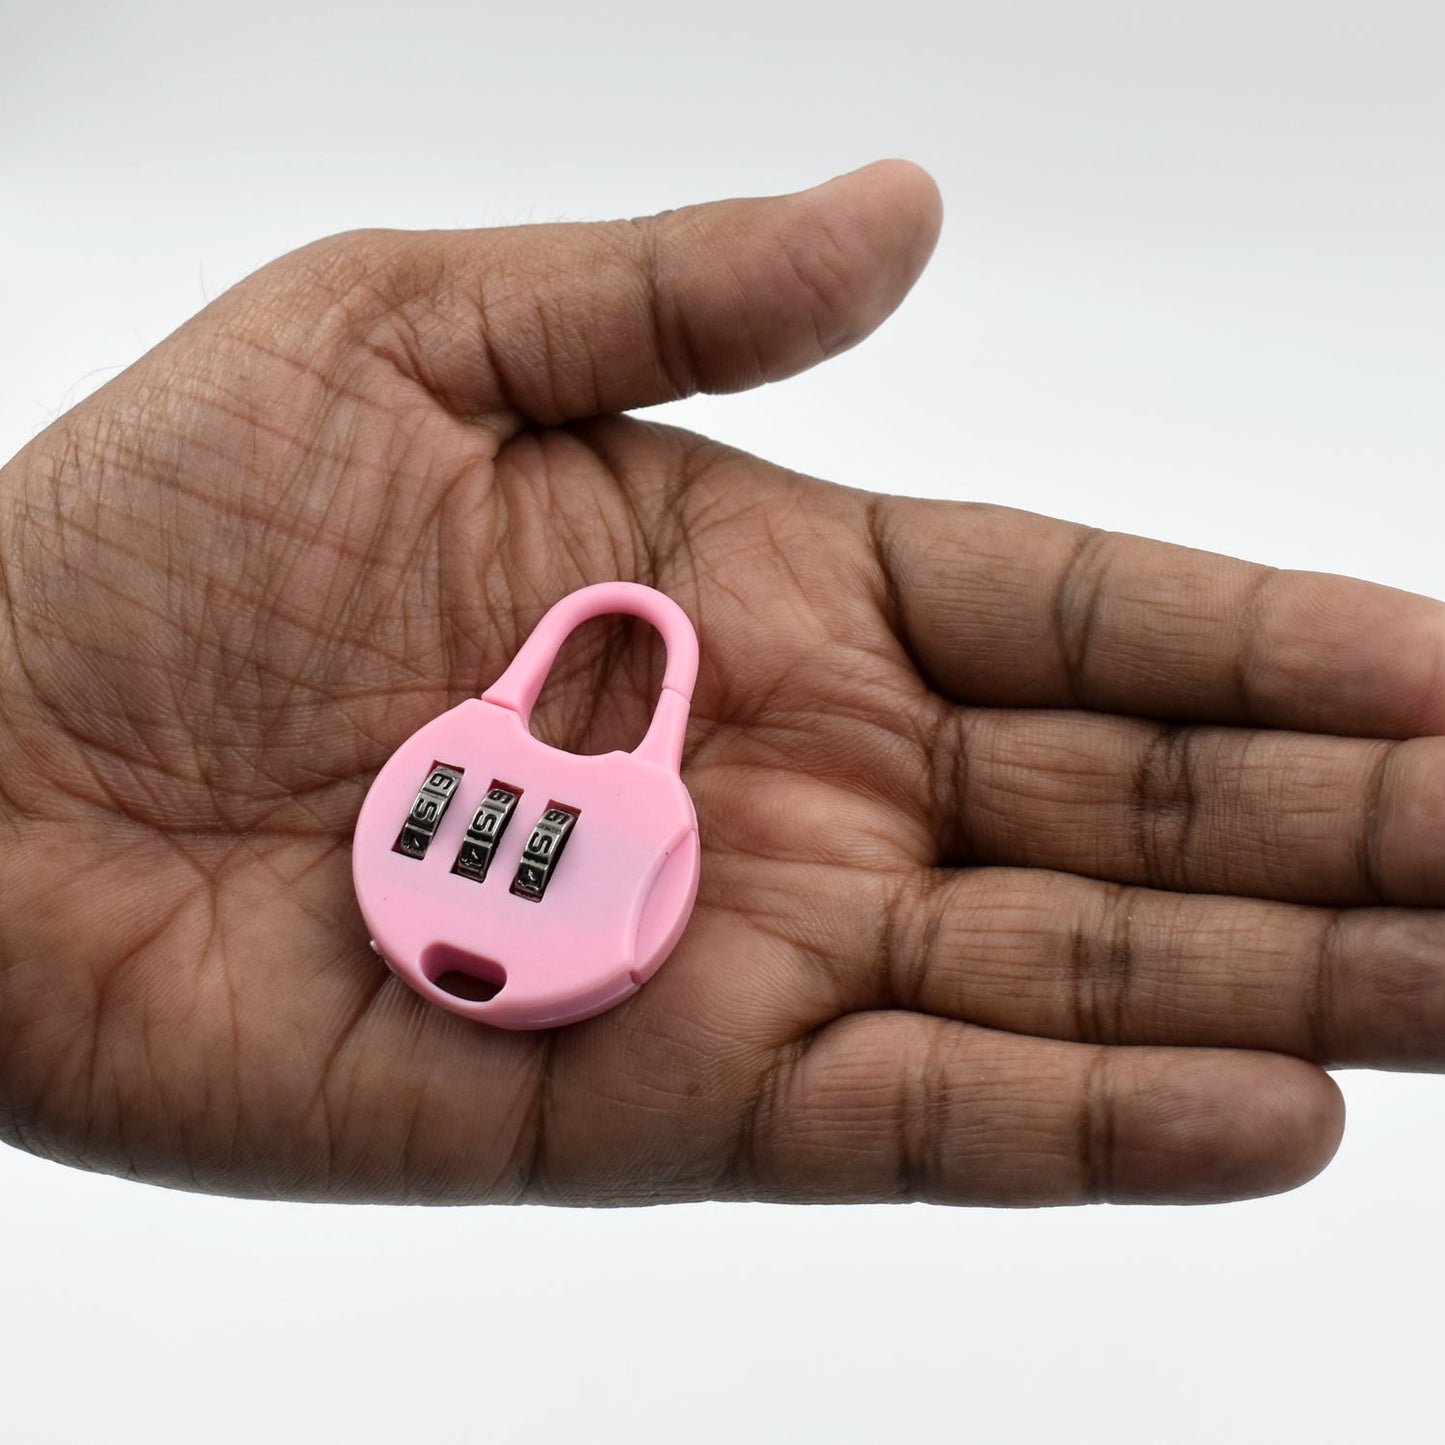 3 Digit Zipper Lock and zipper tool in all security purposes of zipper material